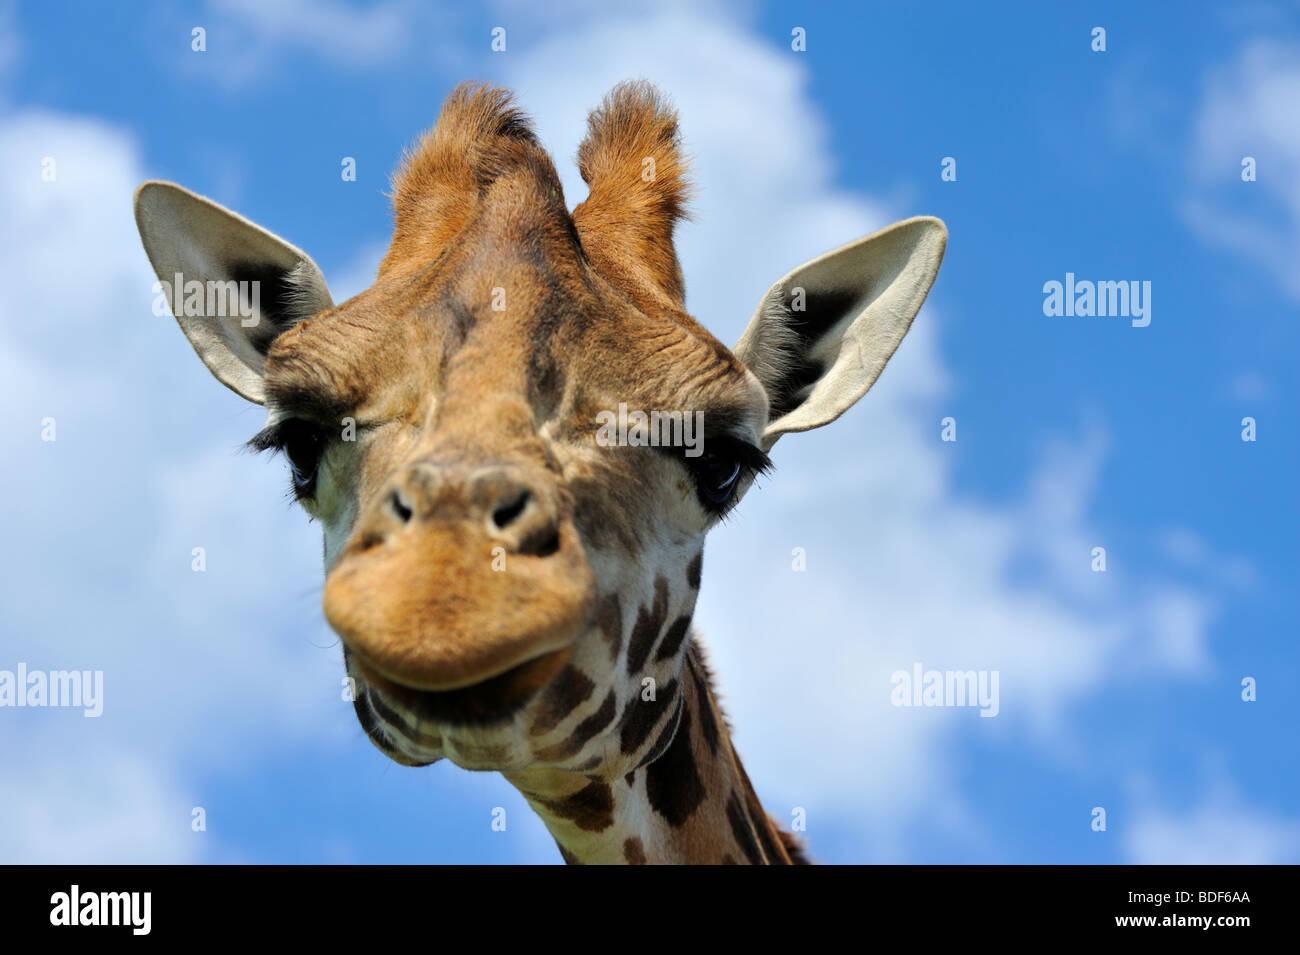 close-up of a funny giraffe Stock Photo